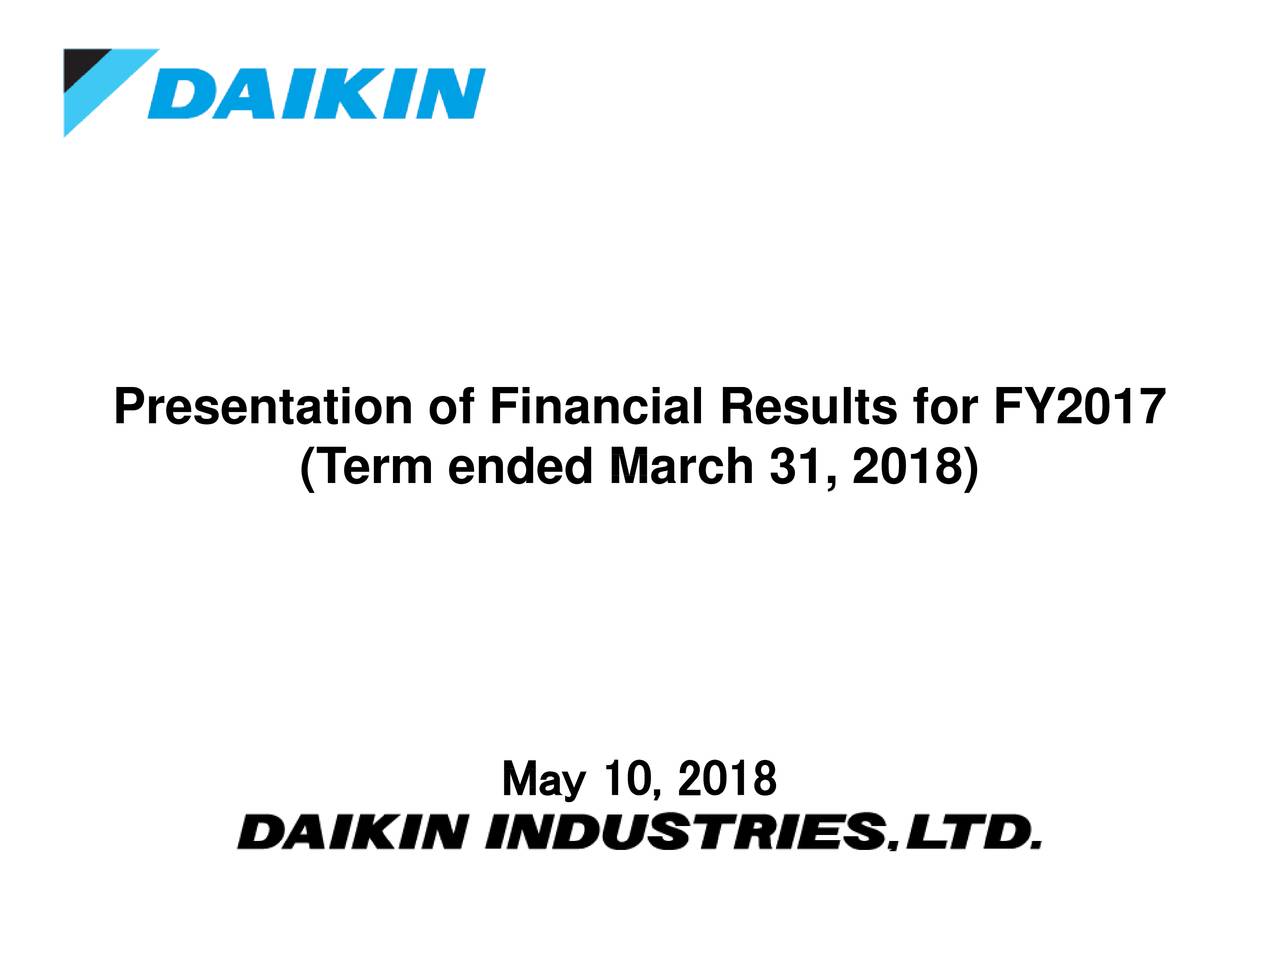 daikin-industries-ltd-adr-2017-q4-results-earnings-call-slides